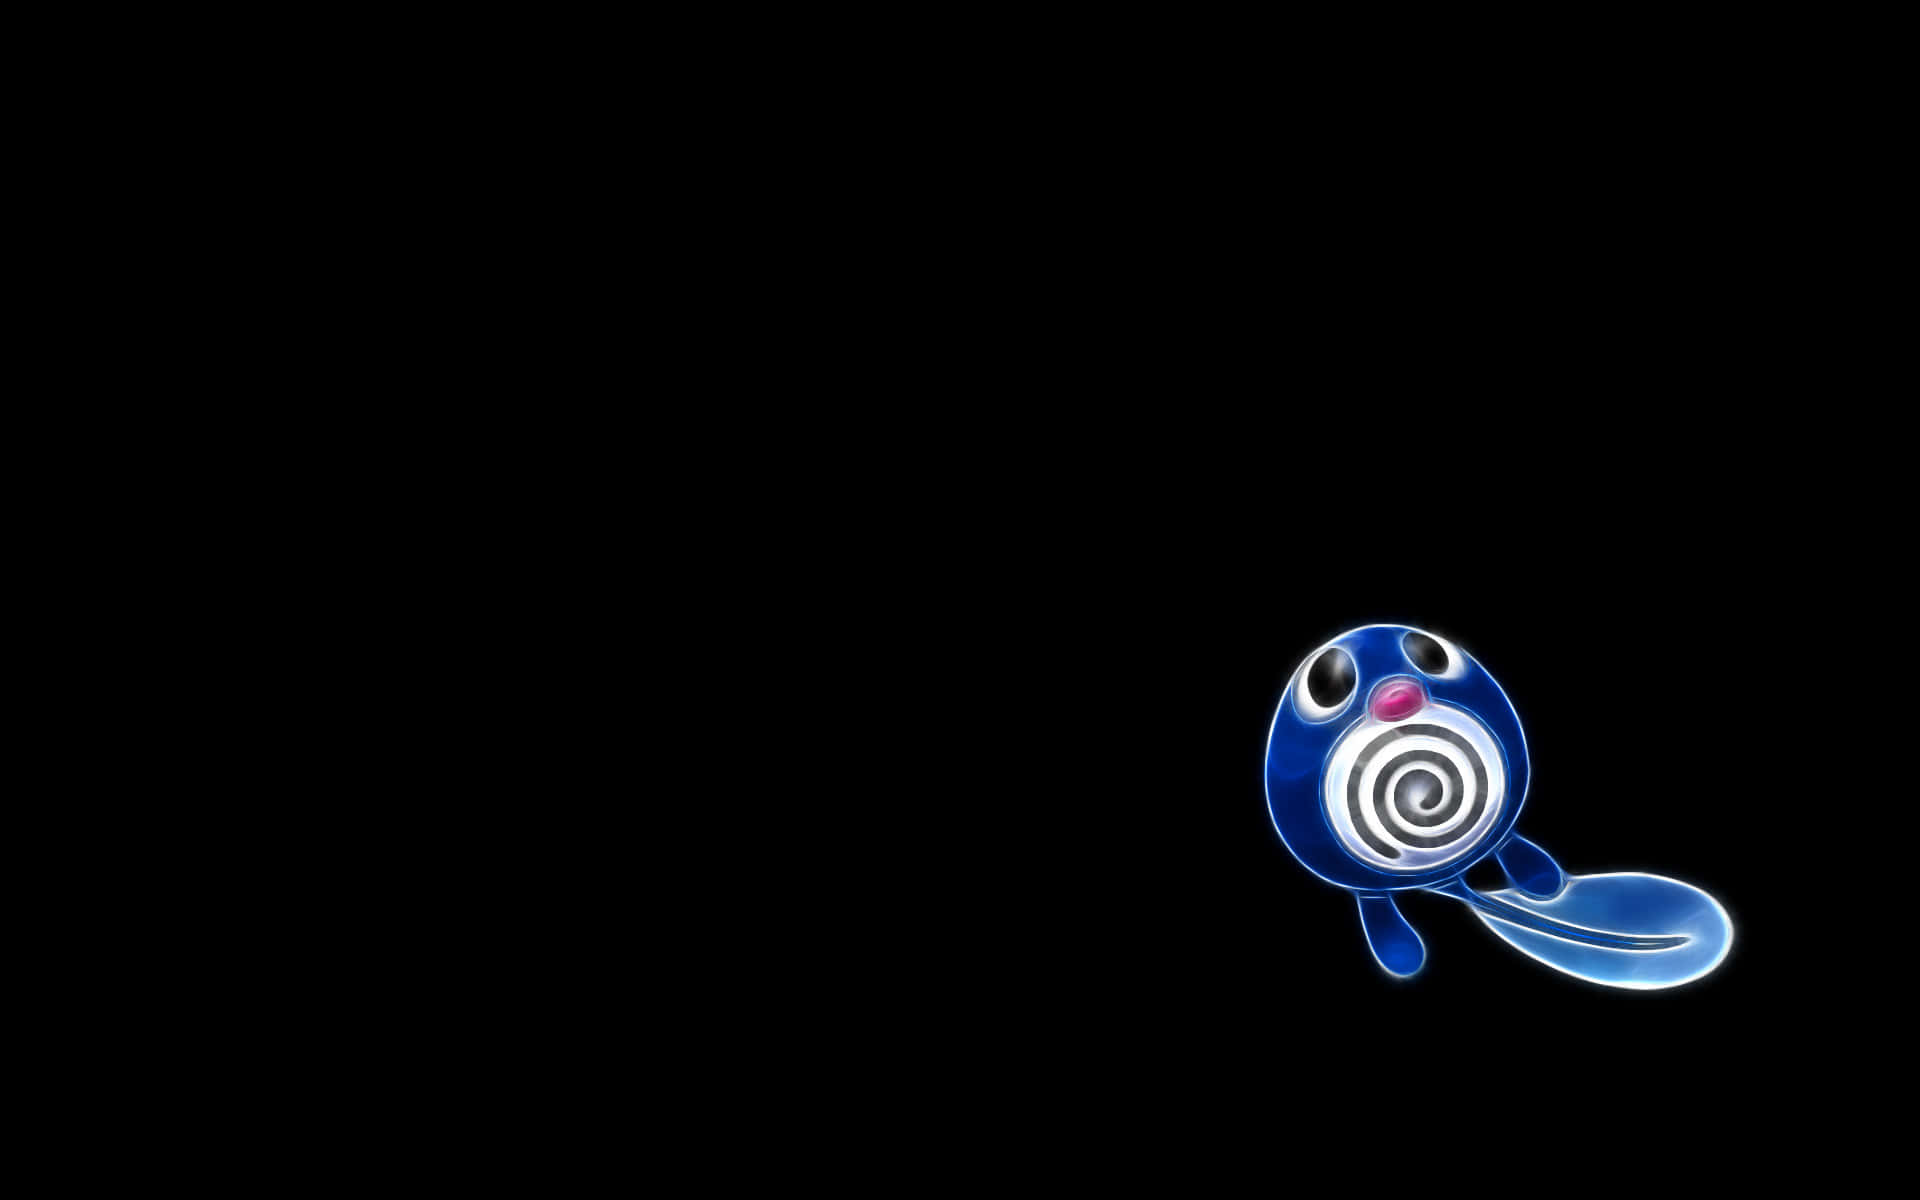 Vibrant Blue Poliwag Pokemon Illustration Wallpaper